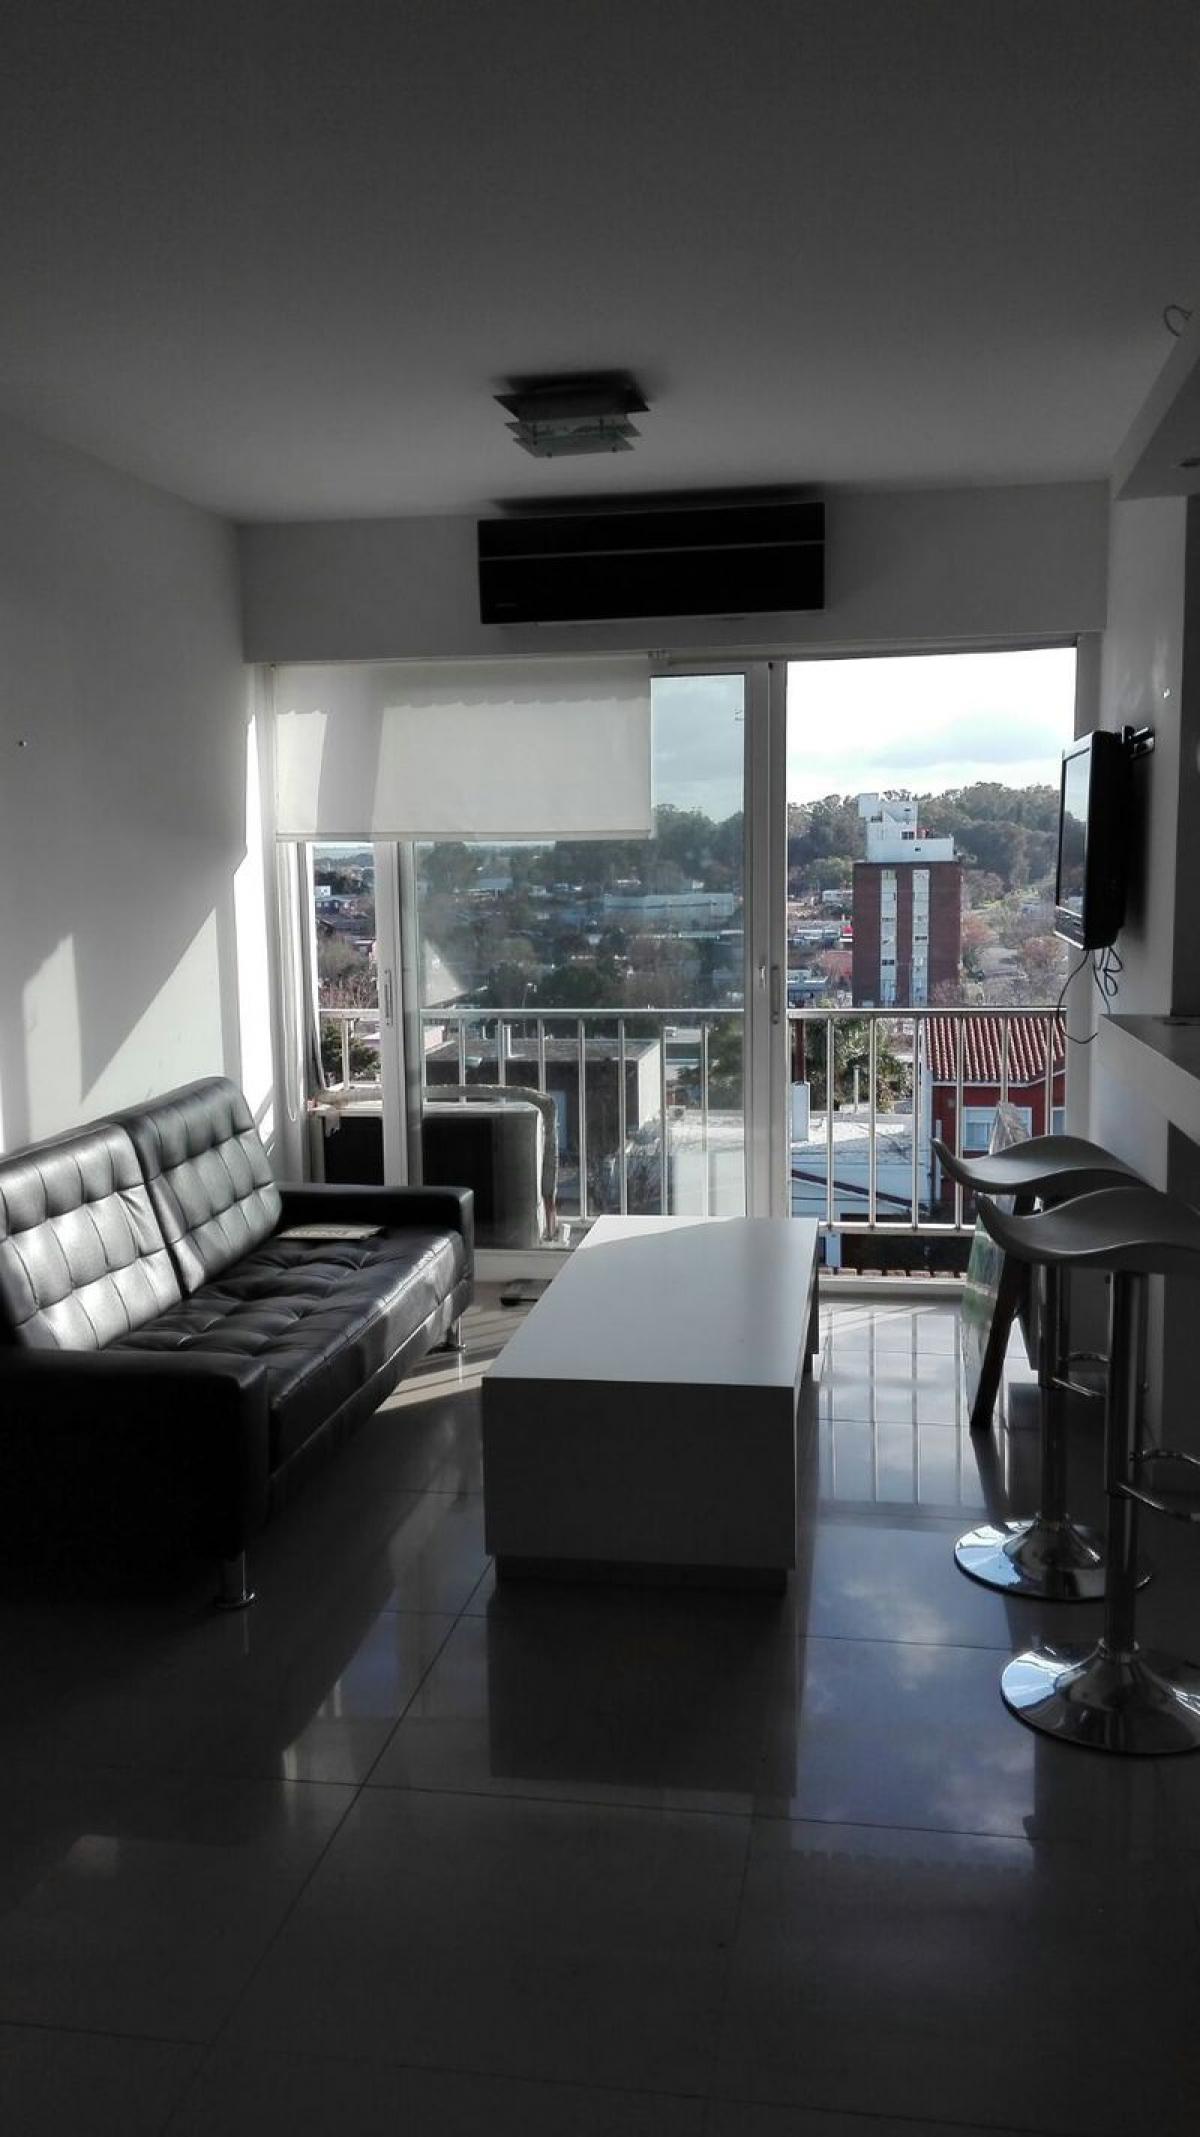 Picture of Apartment For Sale in Colonia, Colonia, Uruguay